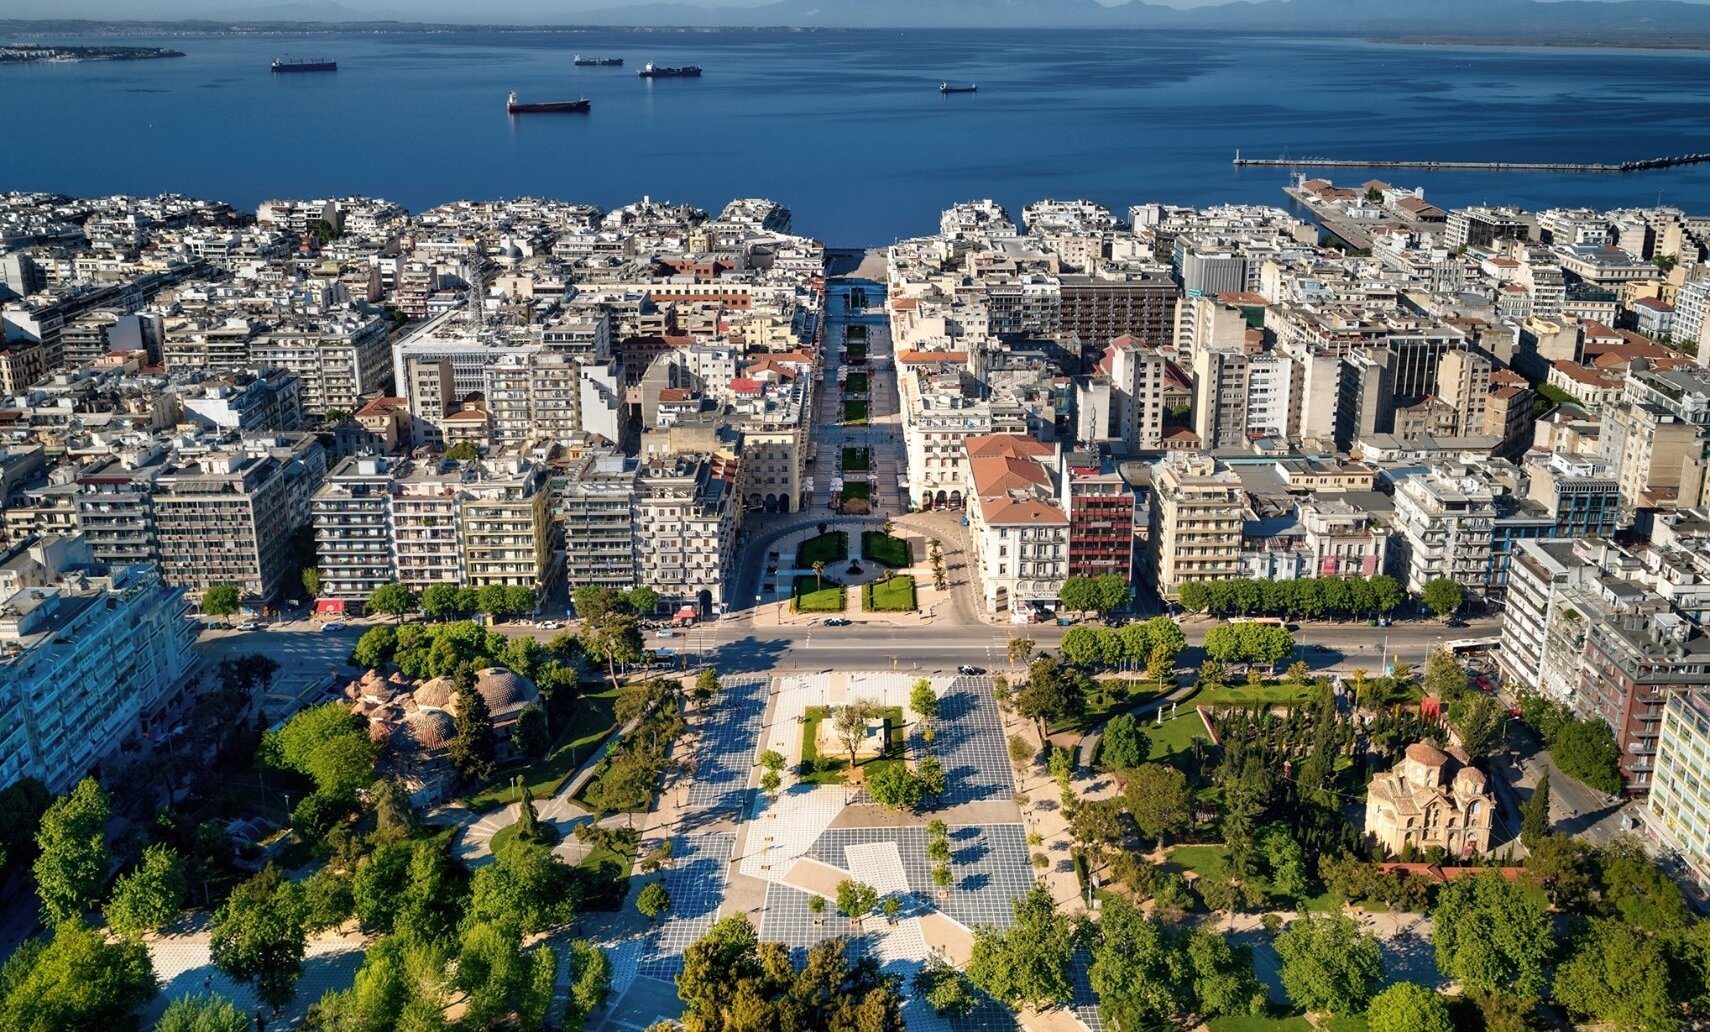 More information about "Οι μετρήσεις μείωσης της ατμοσφαιρικής ρύπανσης στη Θεσσαλονίκη την περίοδο των περιοριστικών μέτρων"